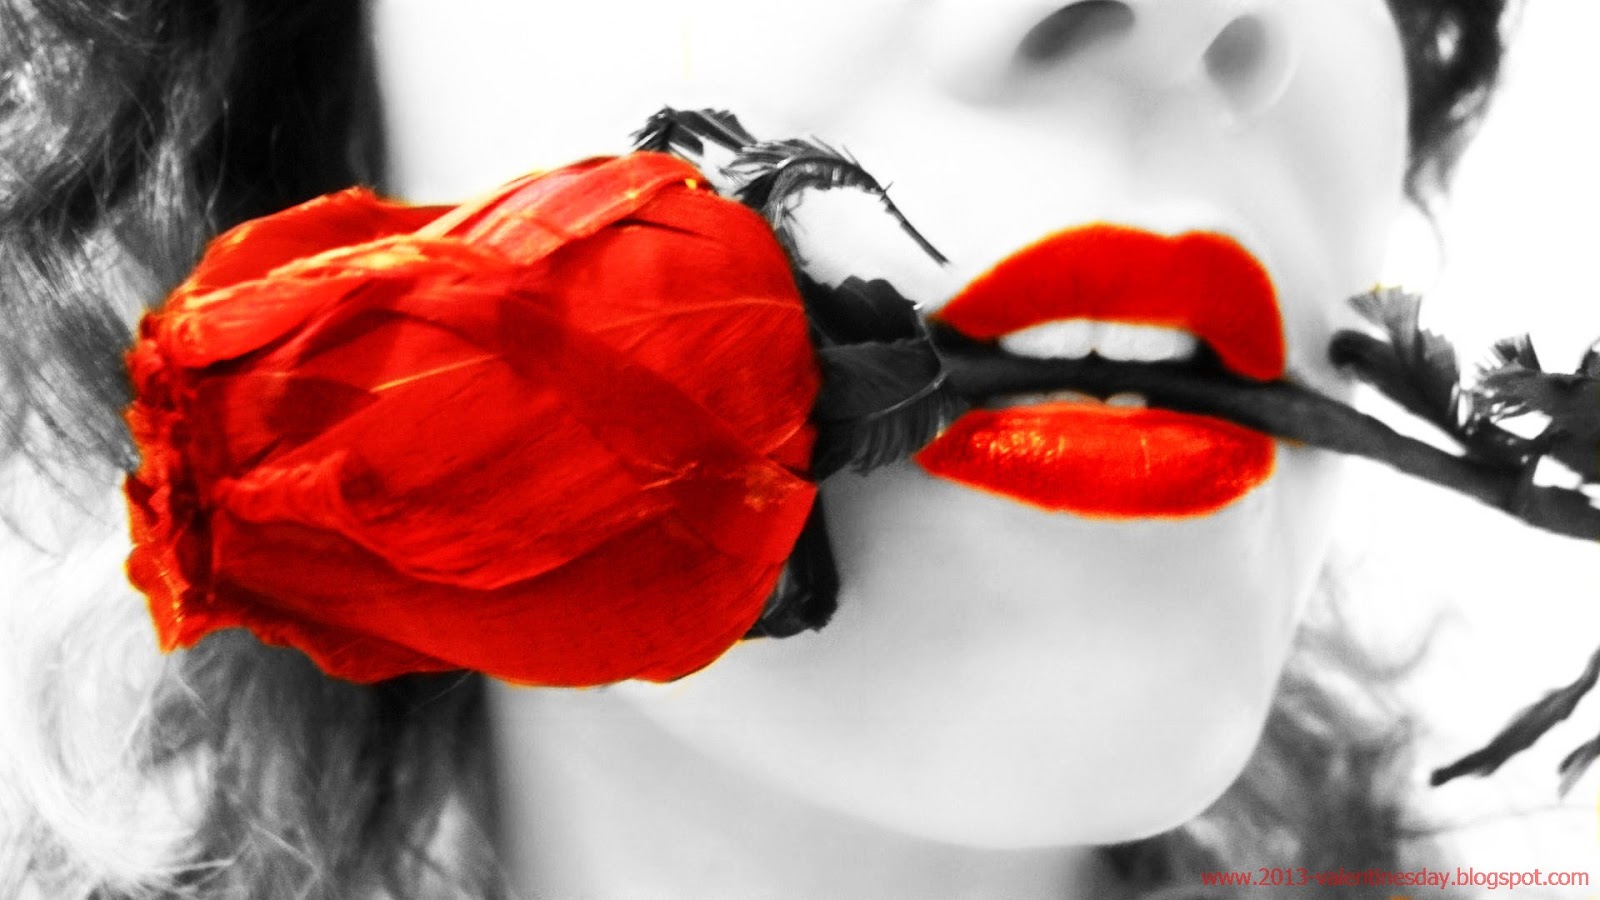 lip kiss wallpaper download,red,white,lip,hair accessory,headpiece